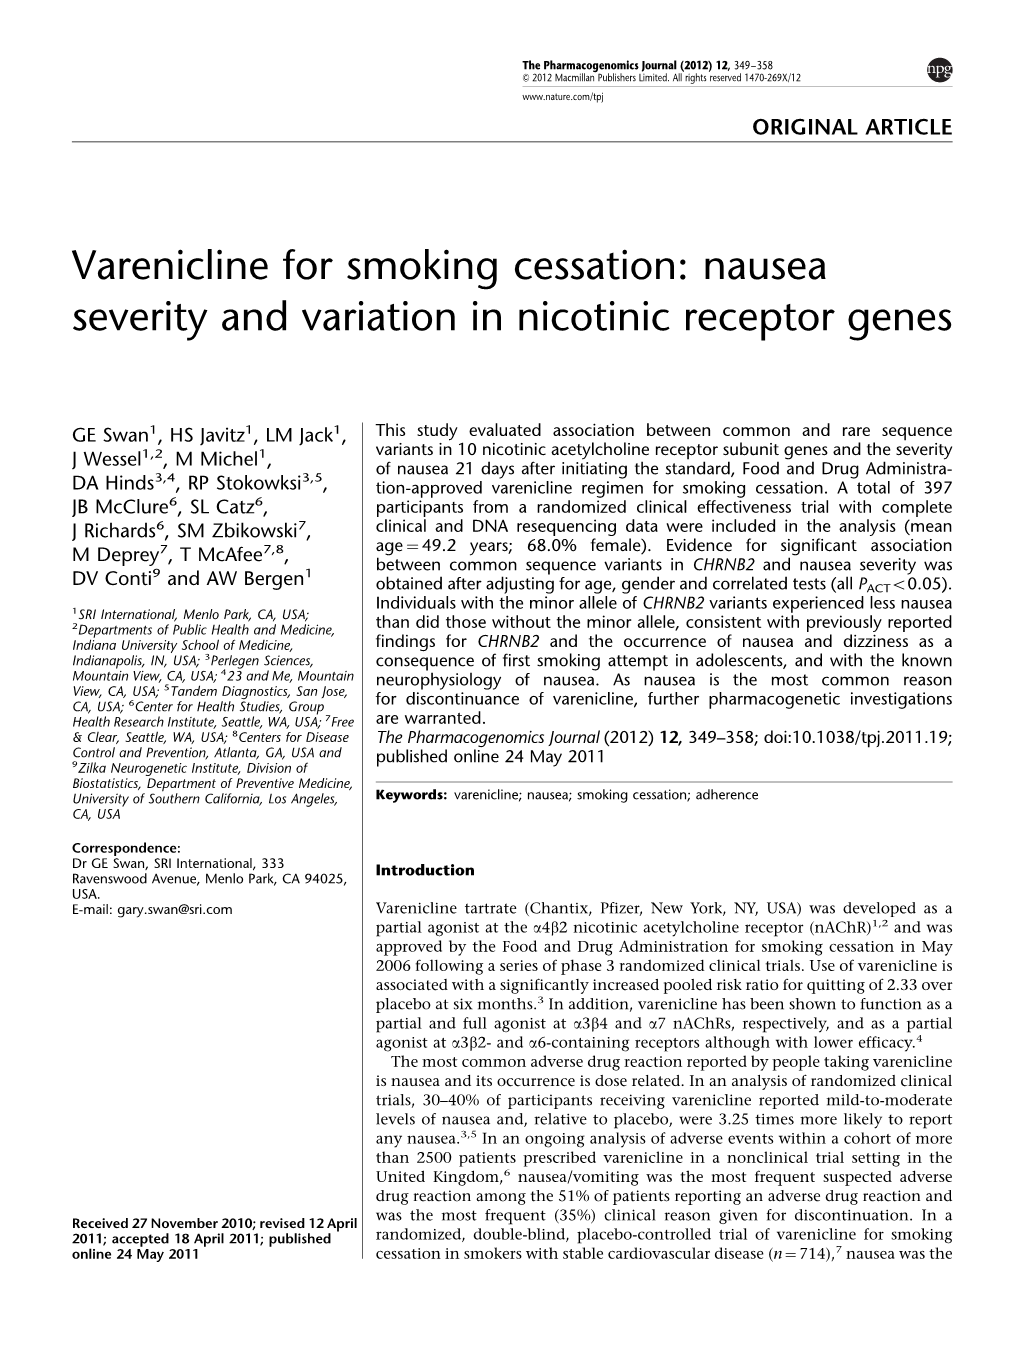 Nausea Severity and Variation in Nicotinic Receptor Genes